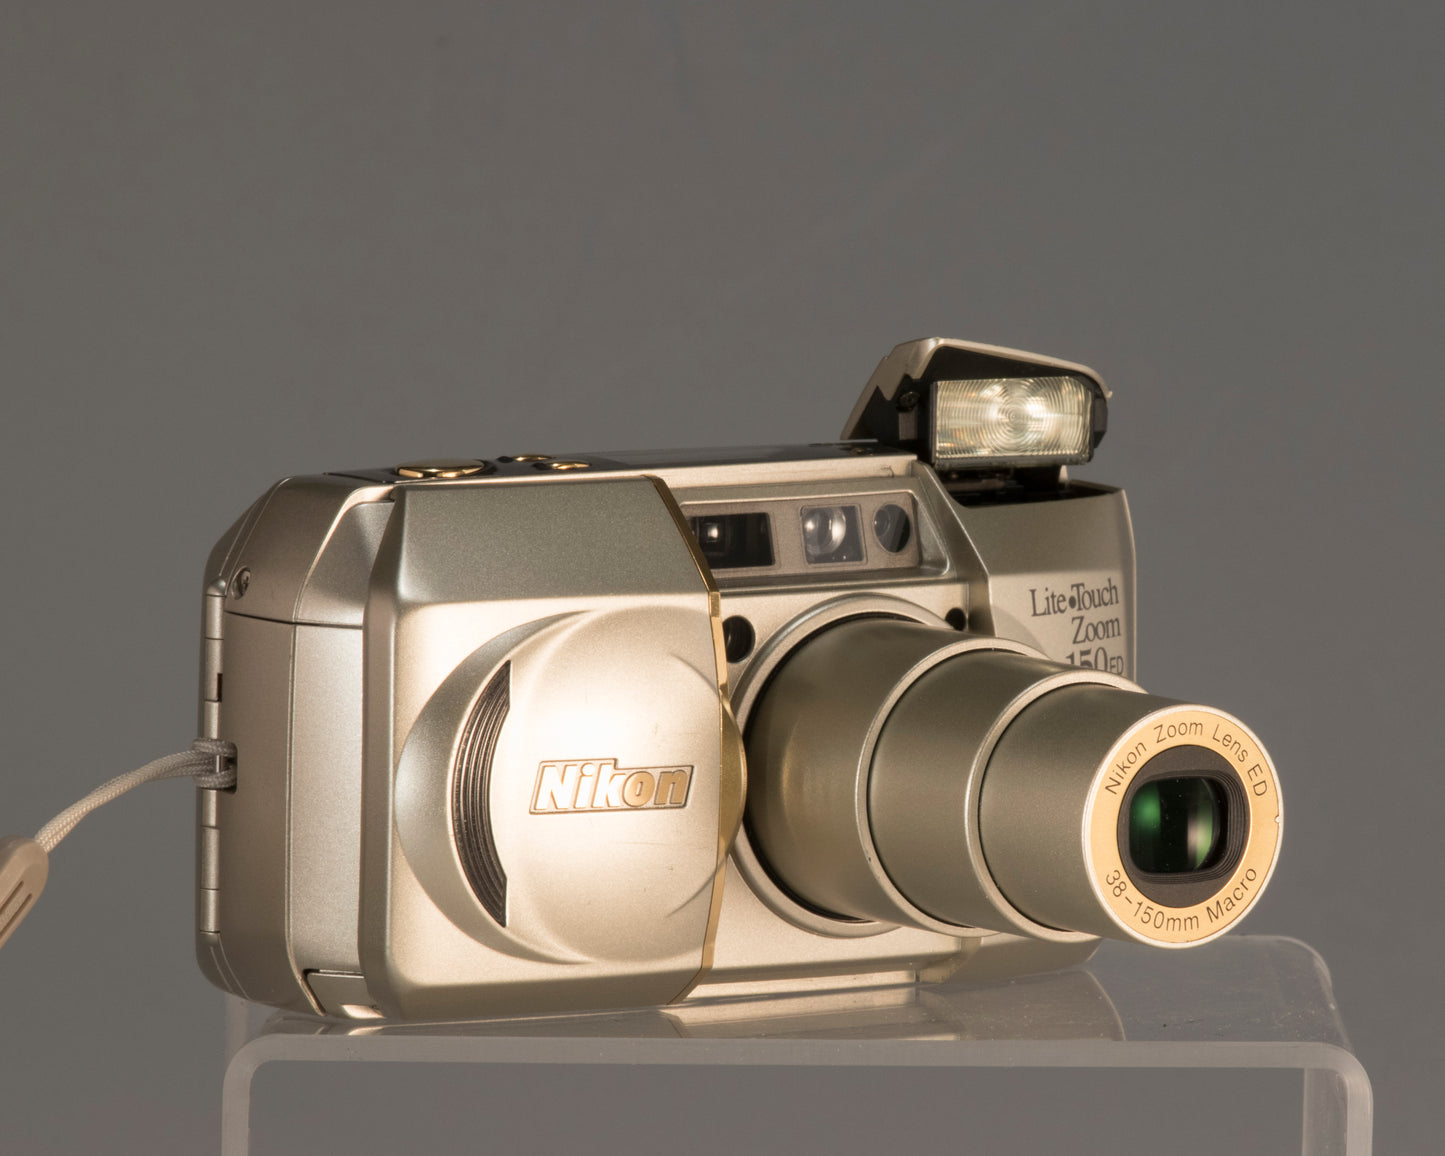 Nikon Lite Touch Zoom 150ED 35mm camera